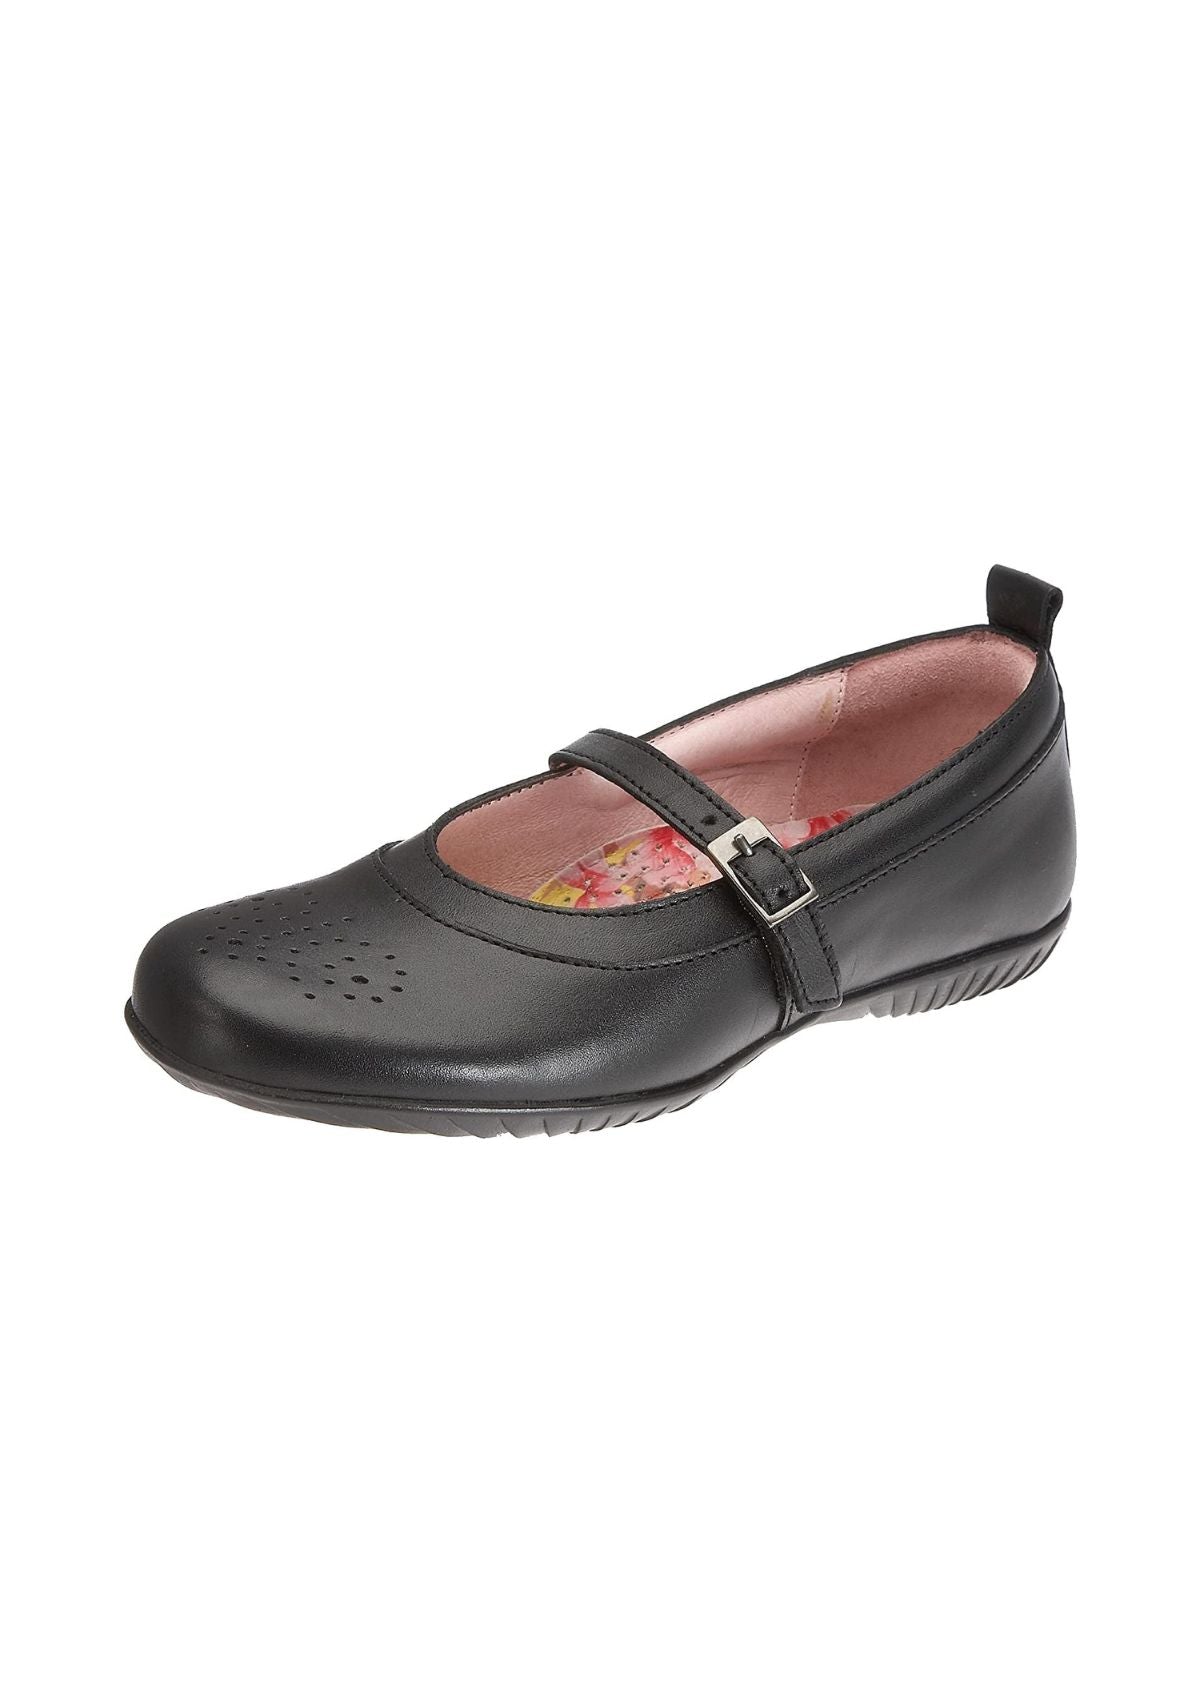 Petasil Girls School Shoes Ethel Black Leather 